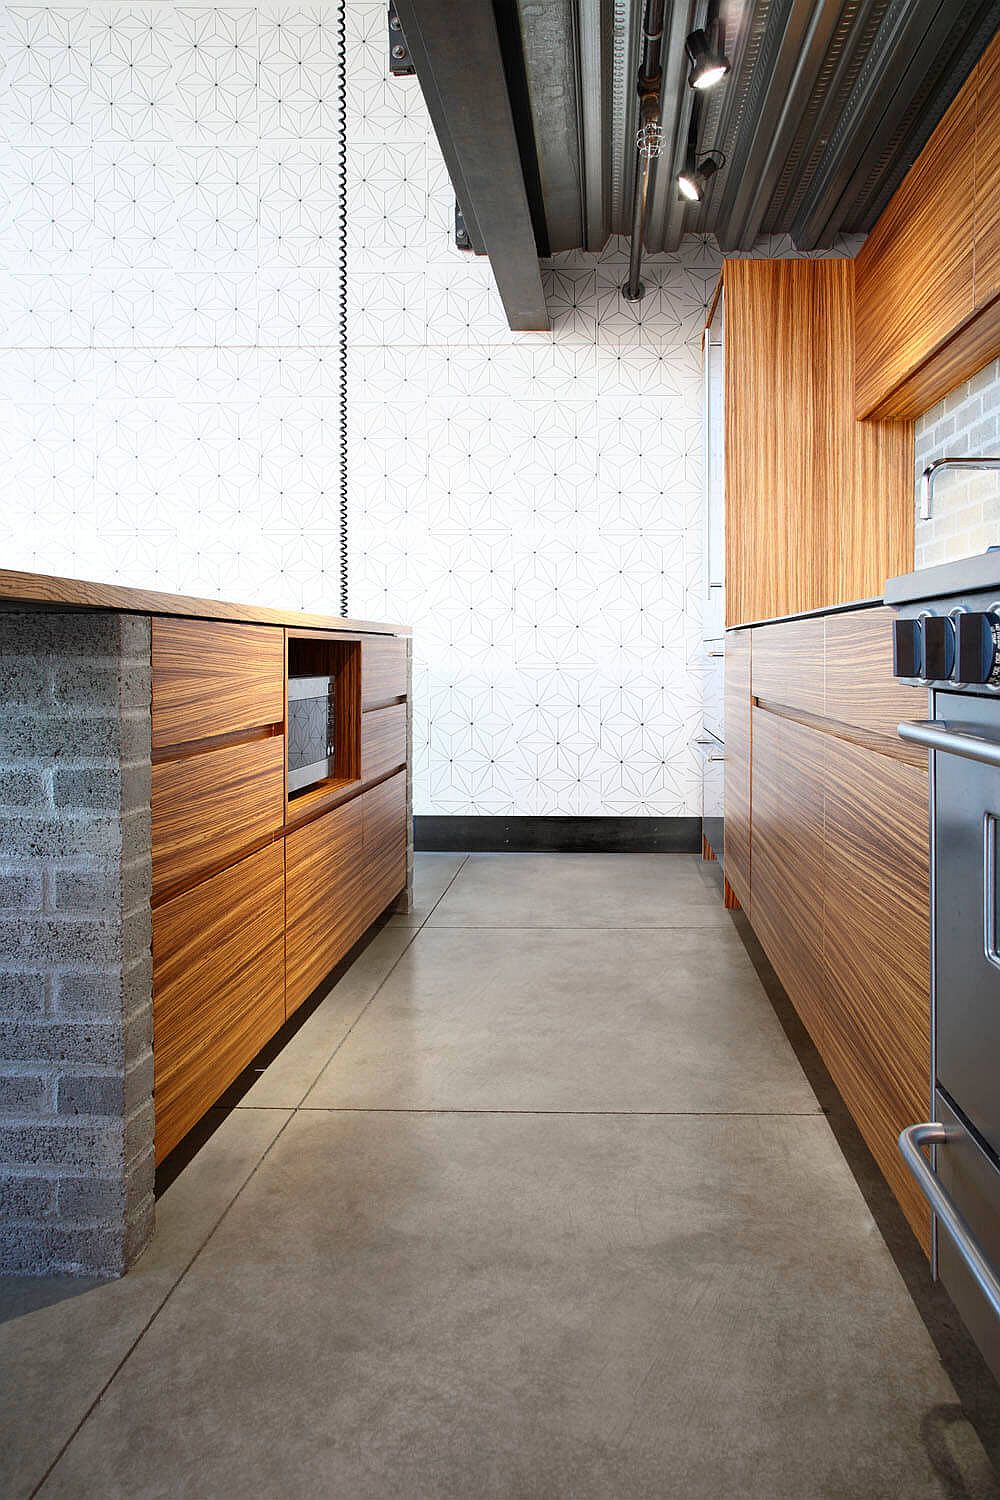 Concrete-bricks-and-wood-transform-the-kitchen-inside-the-loft-style-Seattle-condo-18599